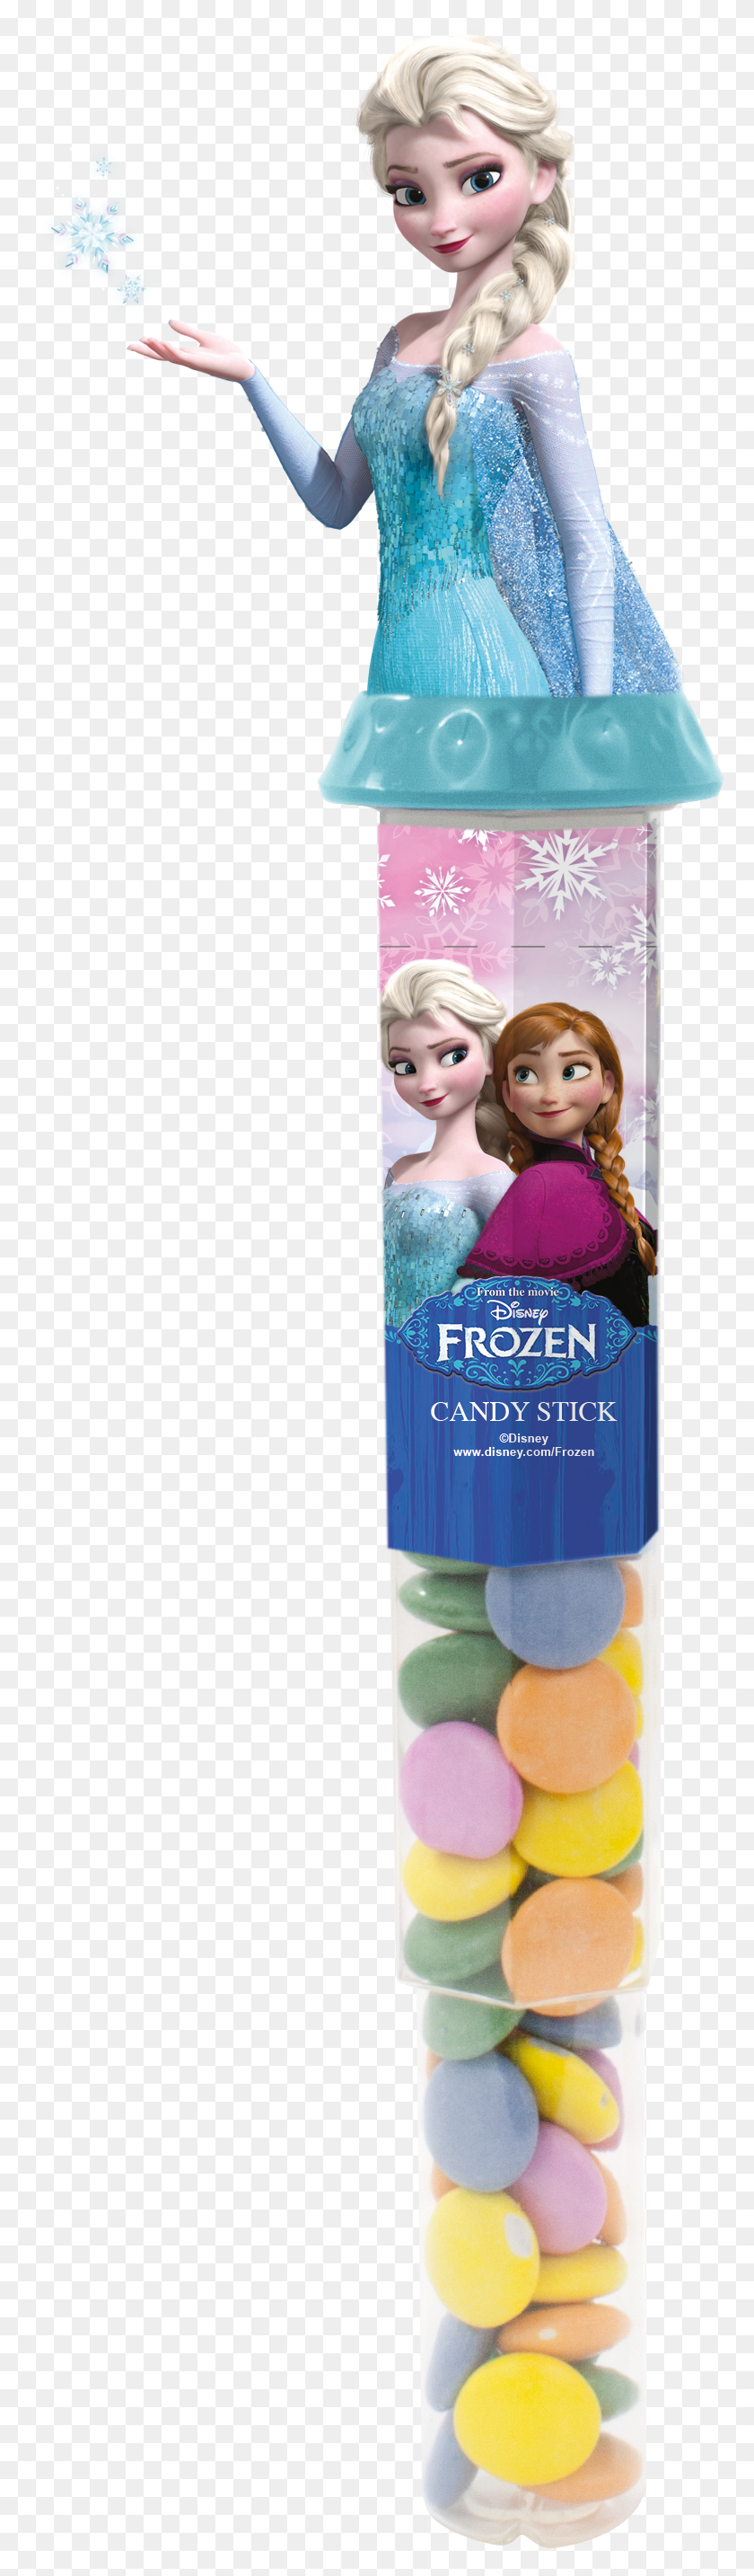 772x2808 Frozen Elsa Candy Stick Lentejas Pedazo Rubio, Juguete, Persona, Humano Hd Png